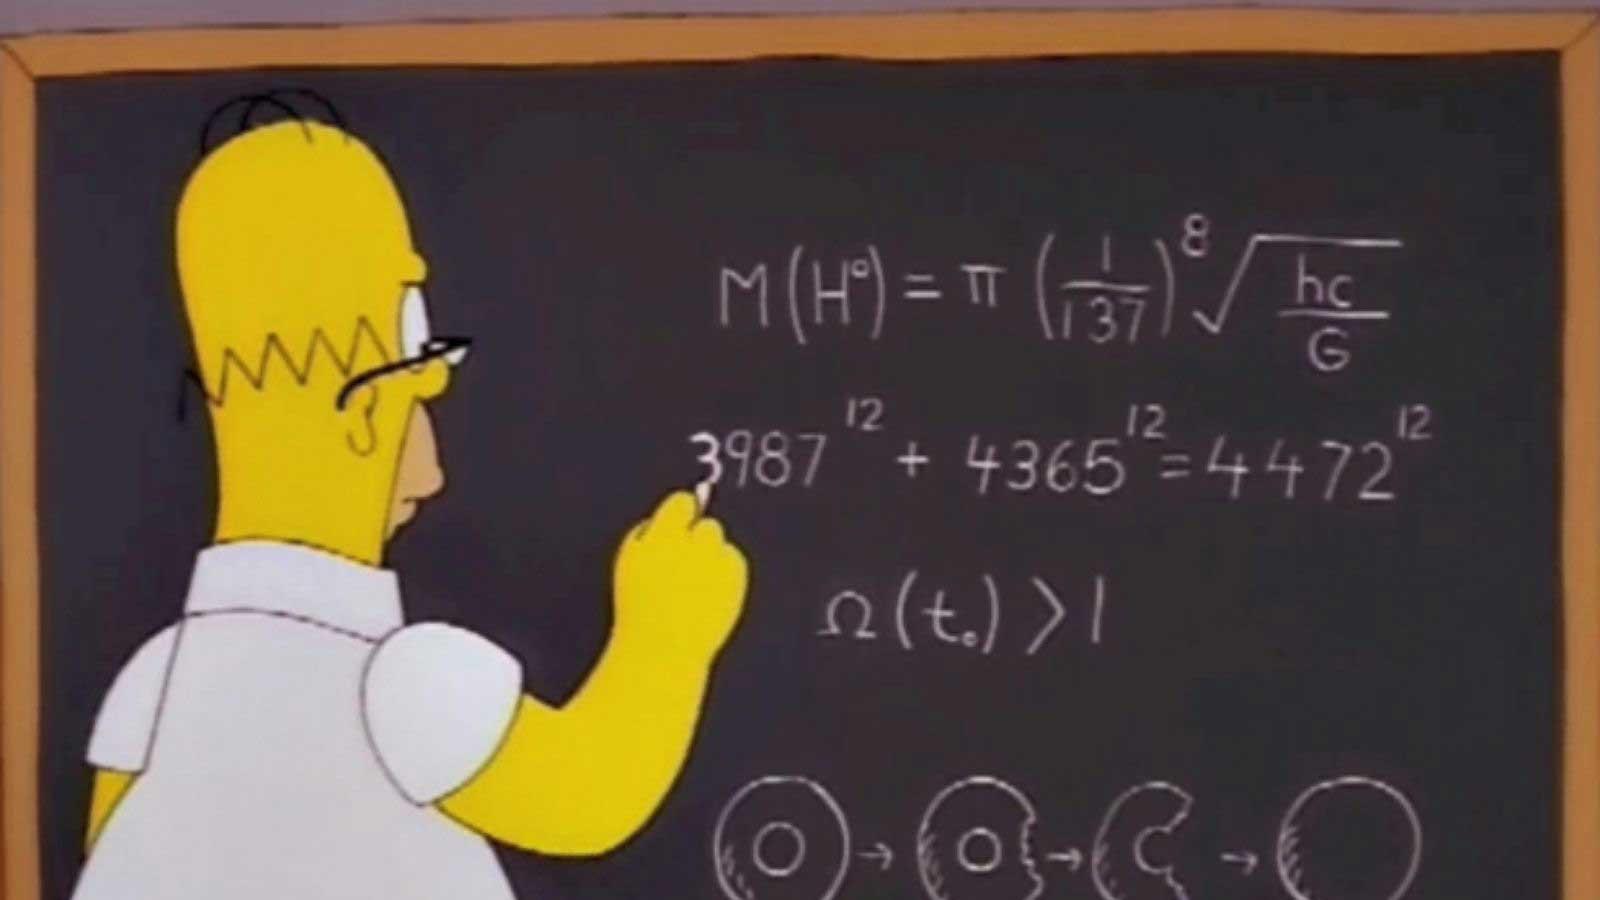 تخمین جرم بوزون هیگز (ذره خدا) در انیمیشن سیمپسون ها (سریال The Simpsons) با دقت قابل توجه